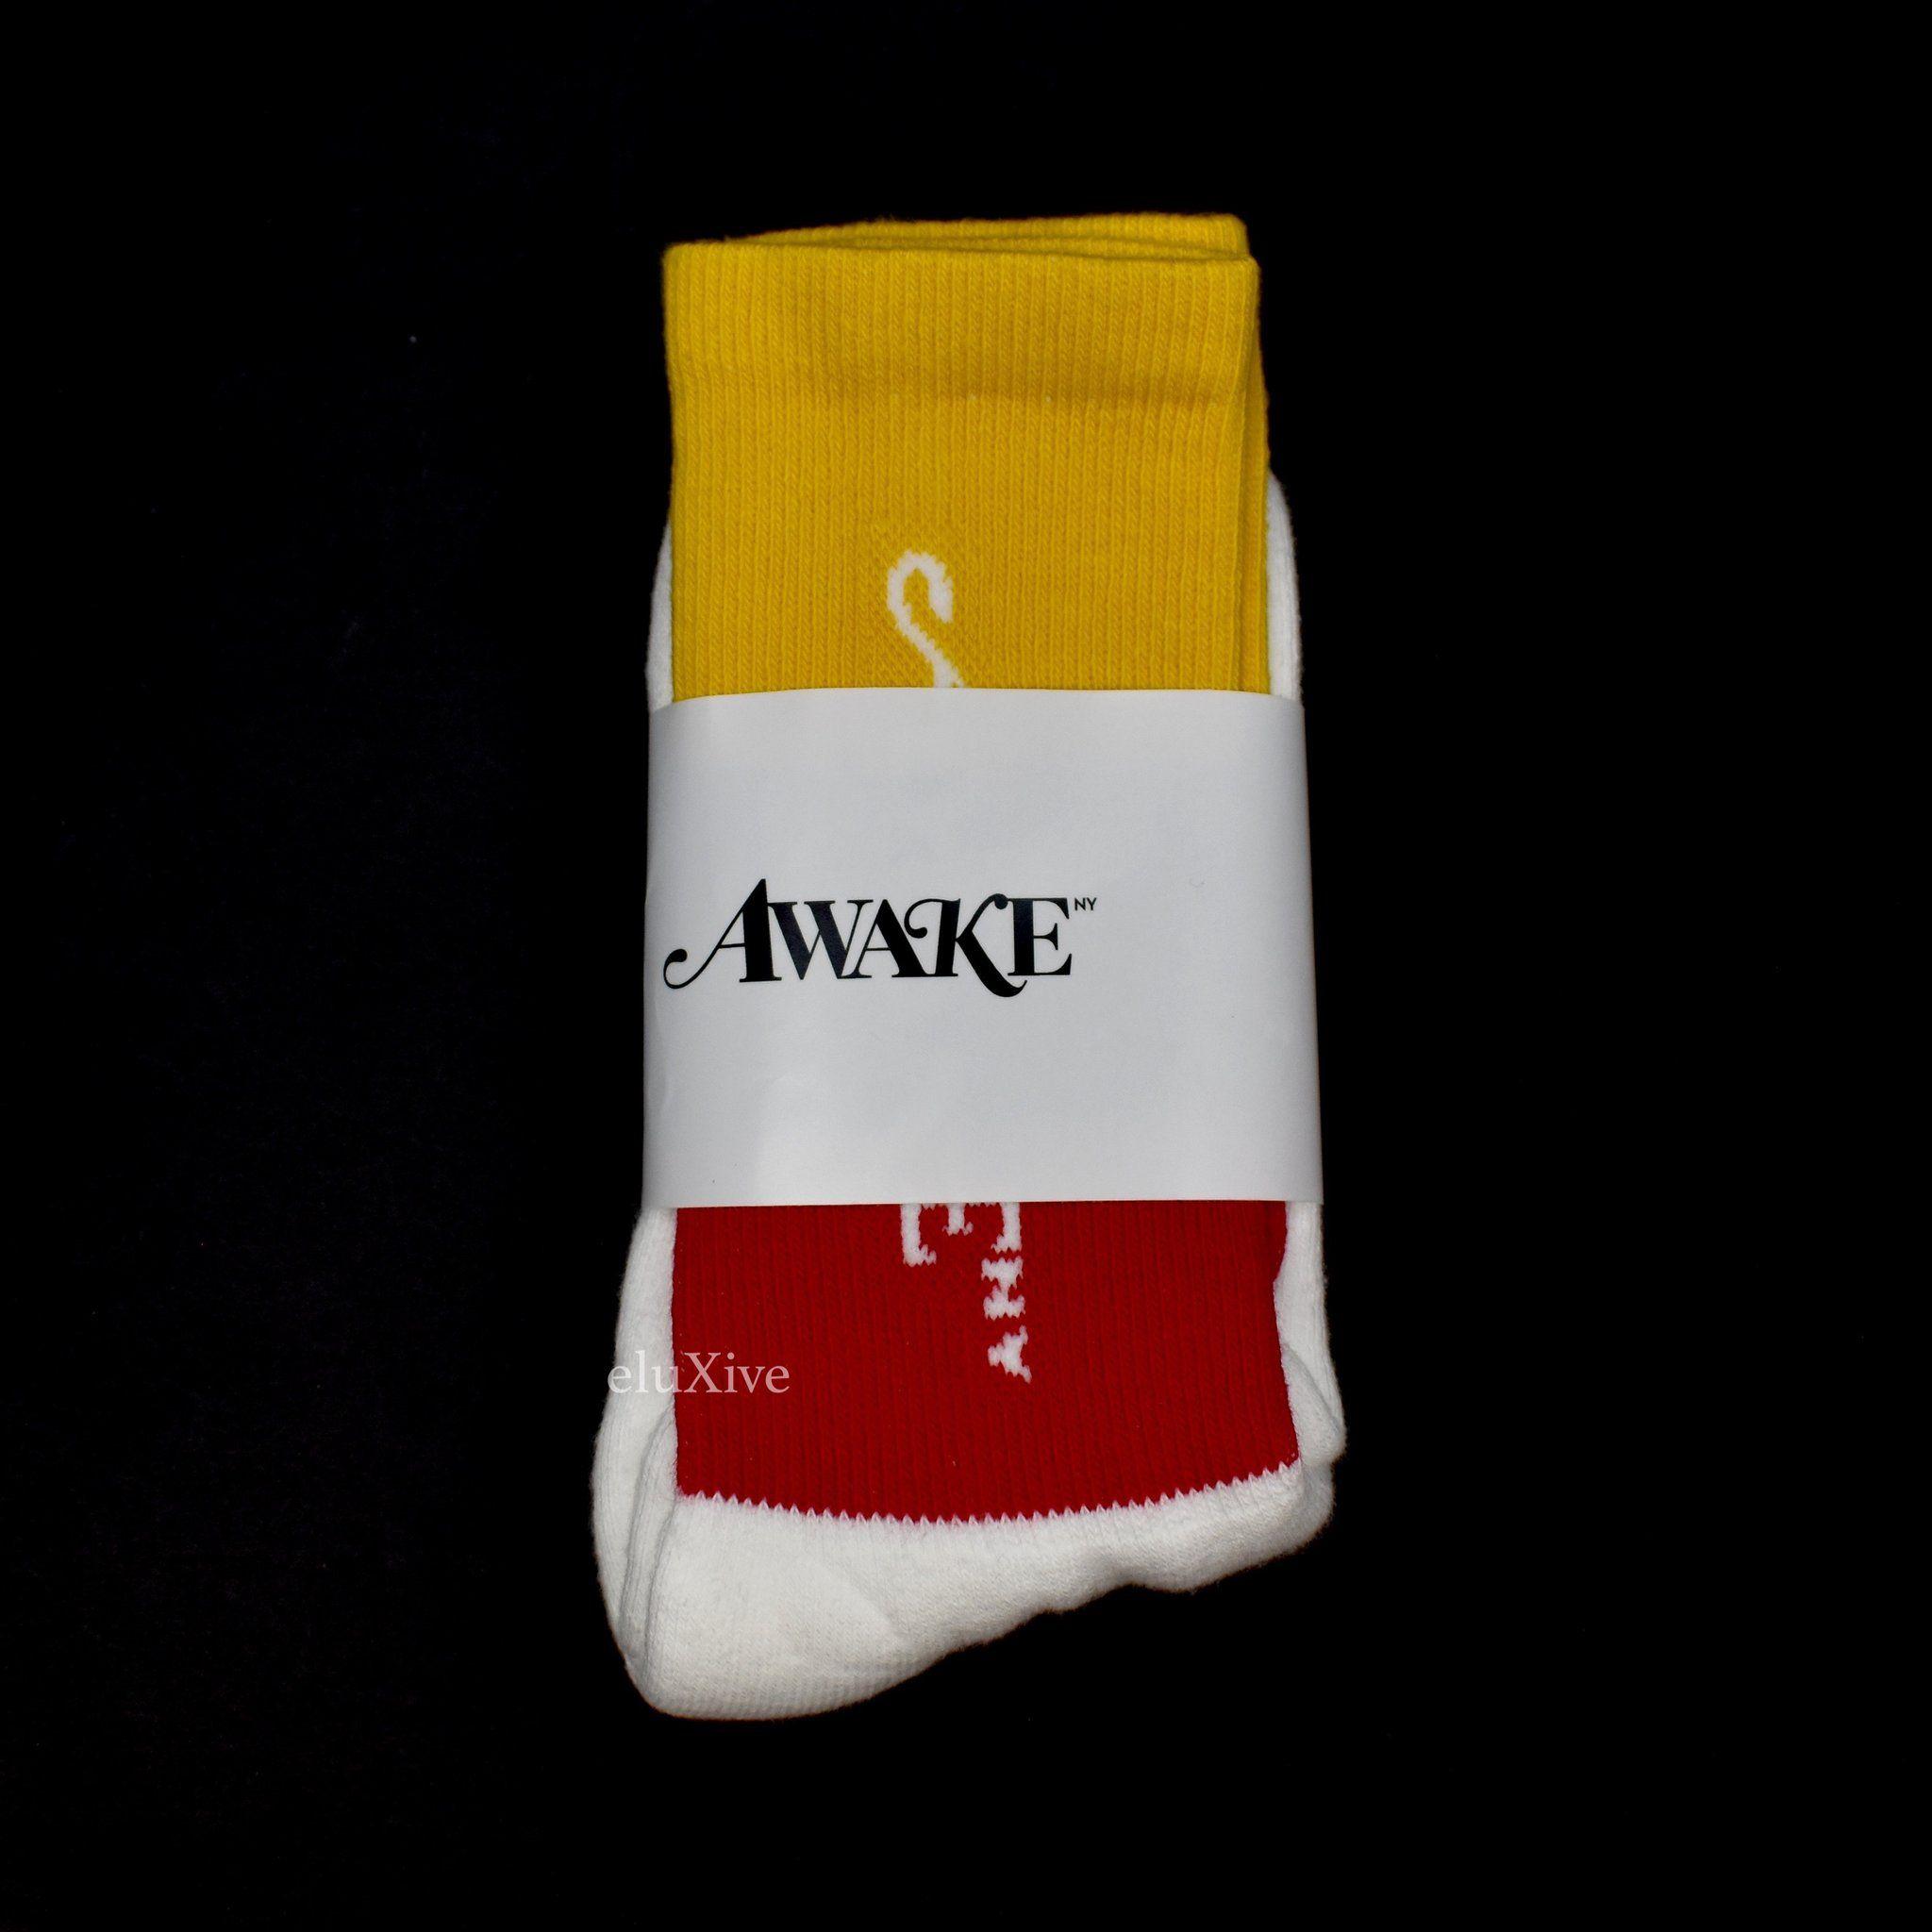 Blue and Yellow Stripe Logo - Awake NY - Red / Blue / Yellow Stripe Logo Knit Crew Socks – eluXive